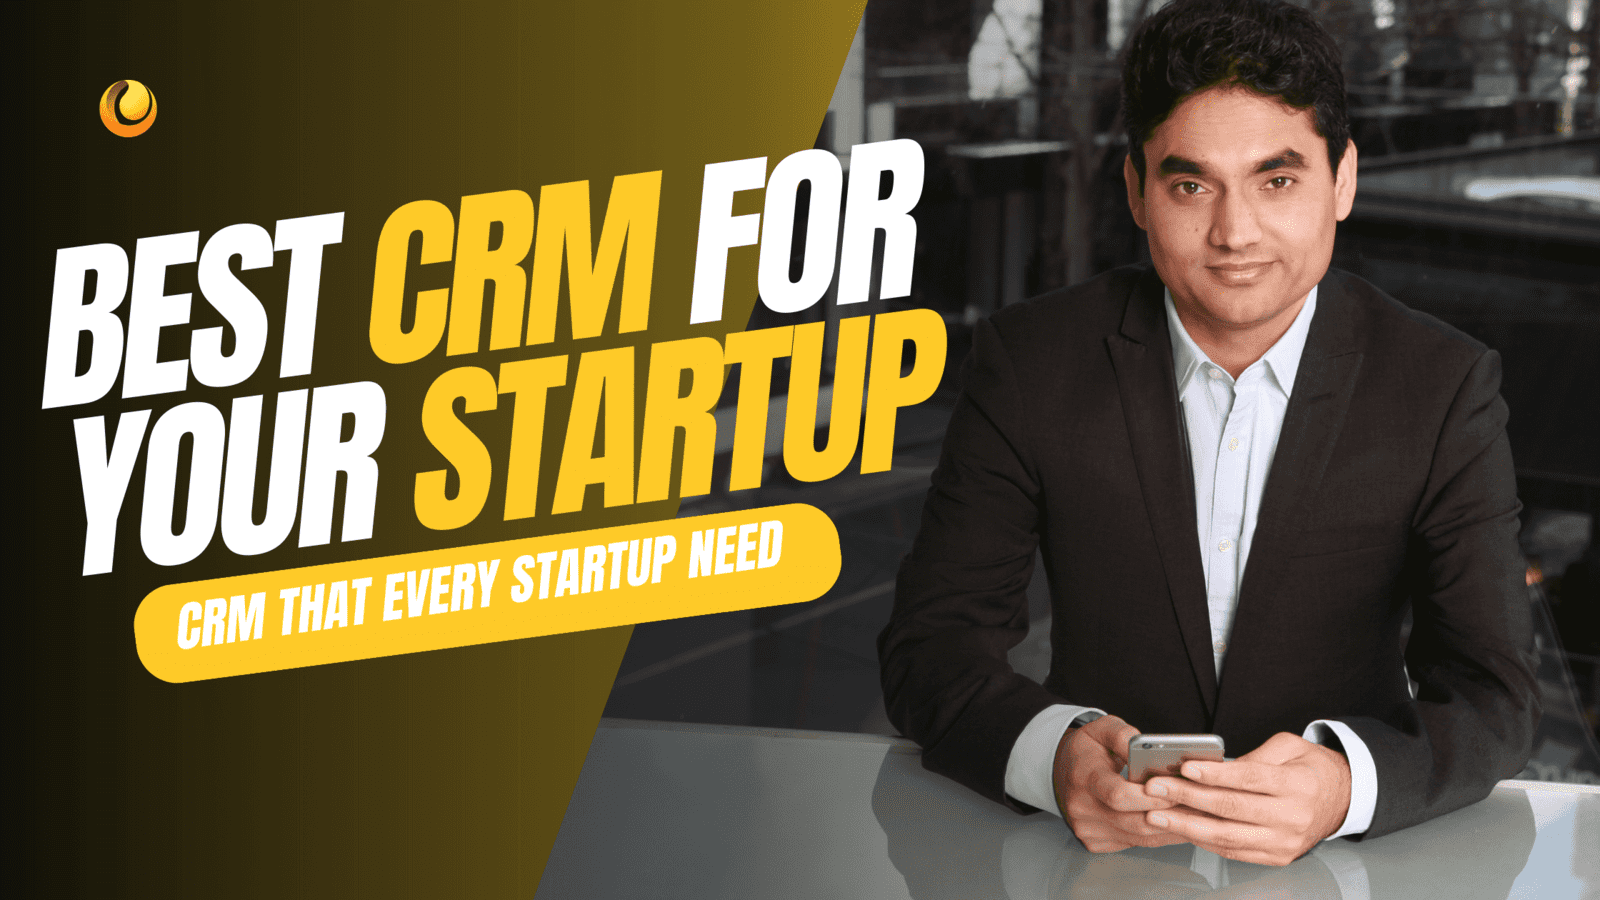 CRM for startups